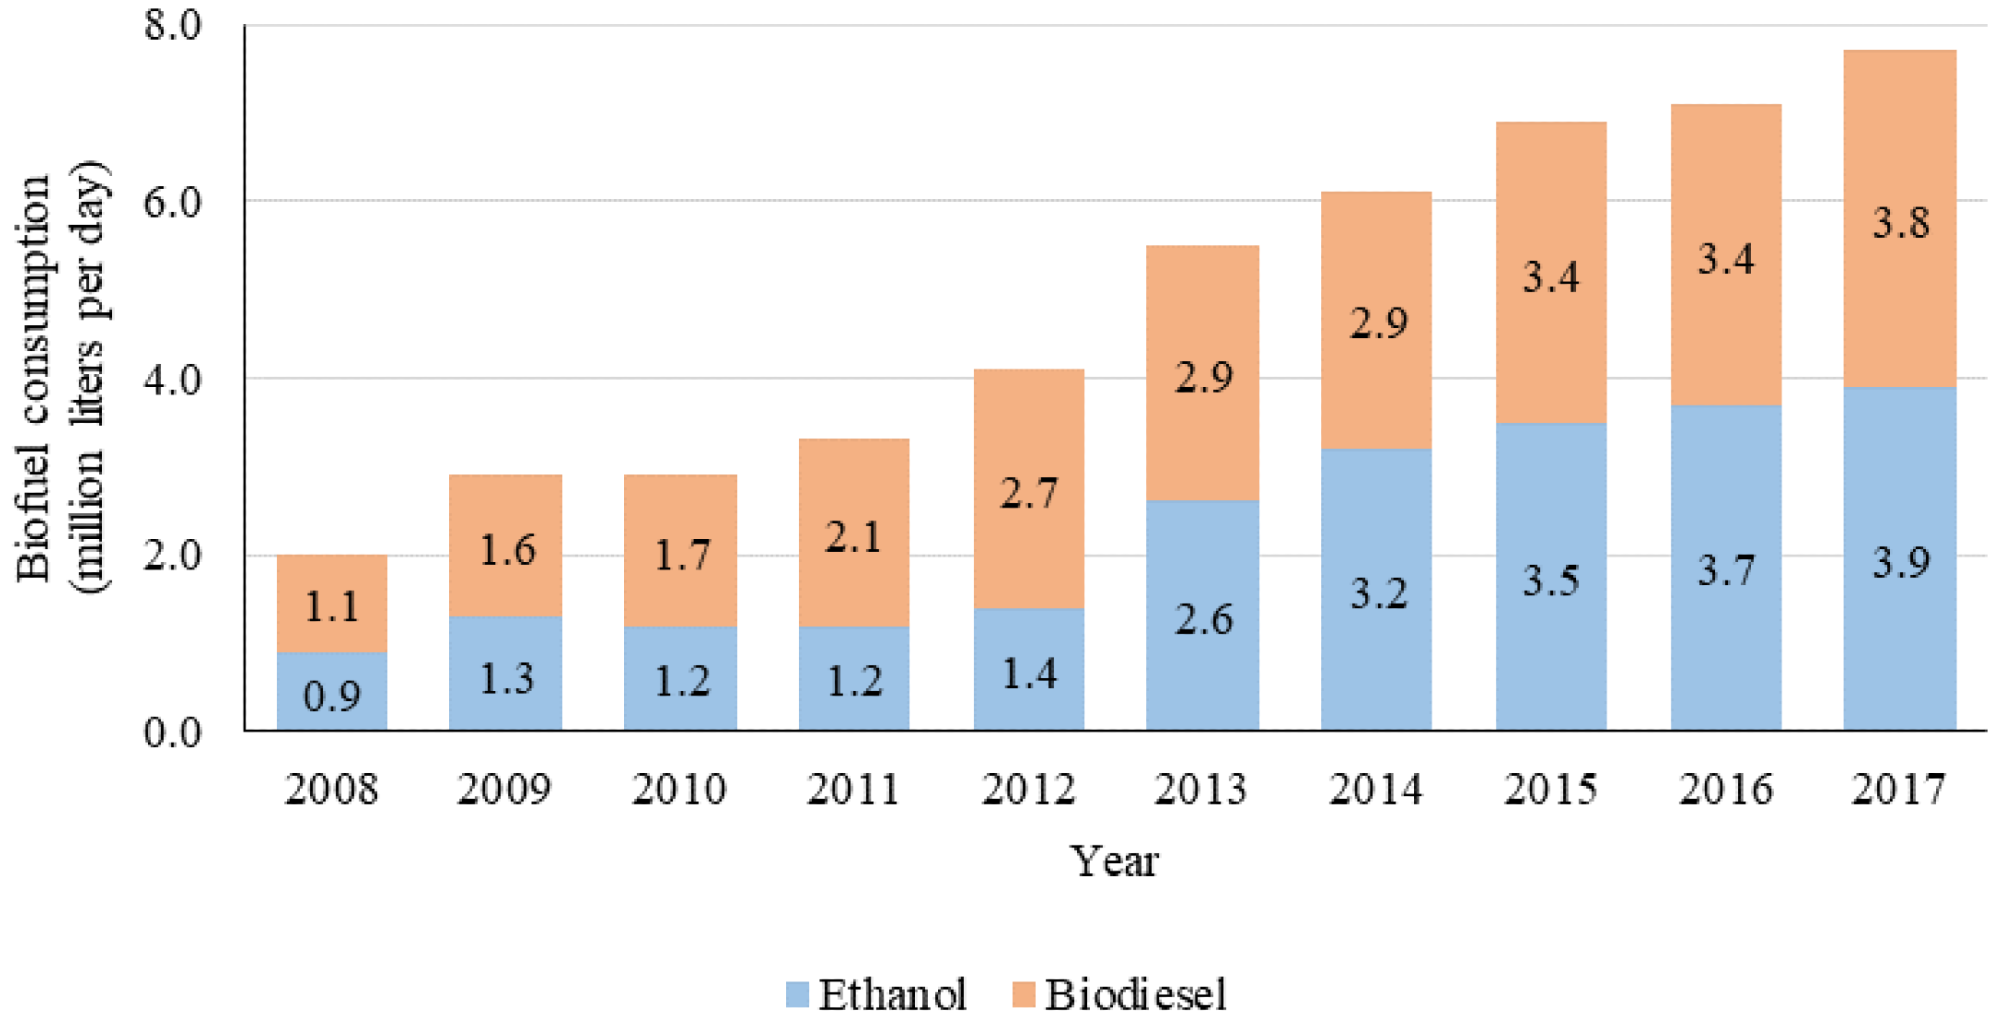 Thailand’s biofuel consumption (million liters per day)